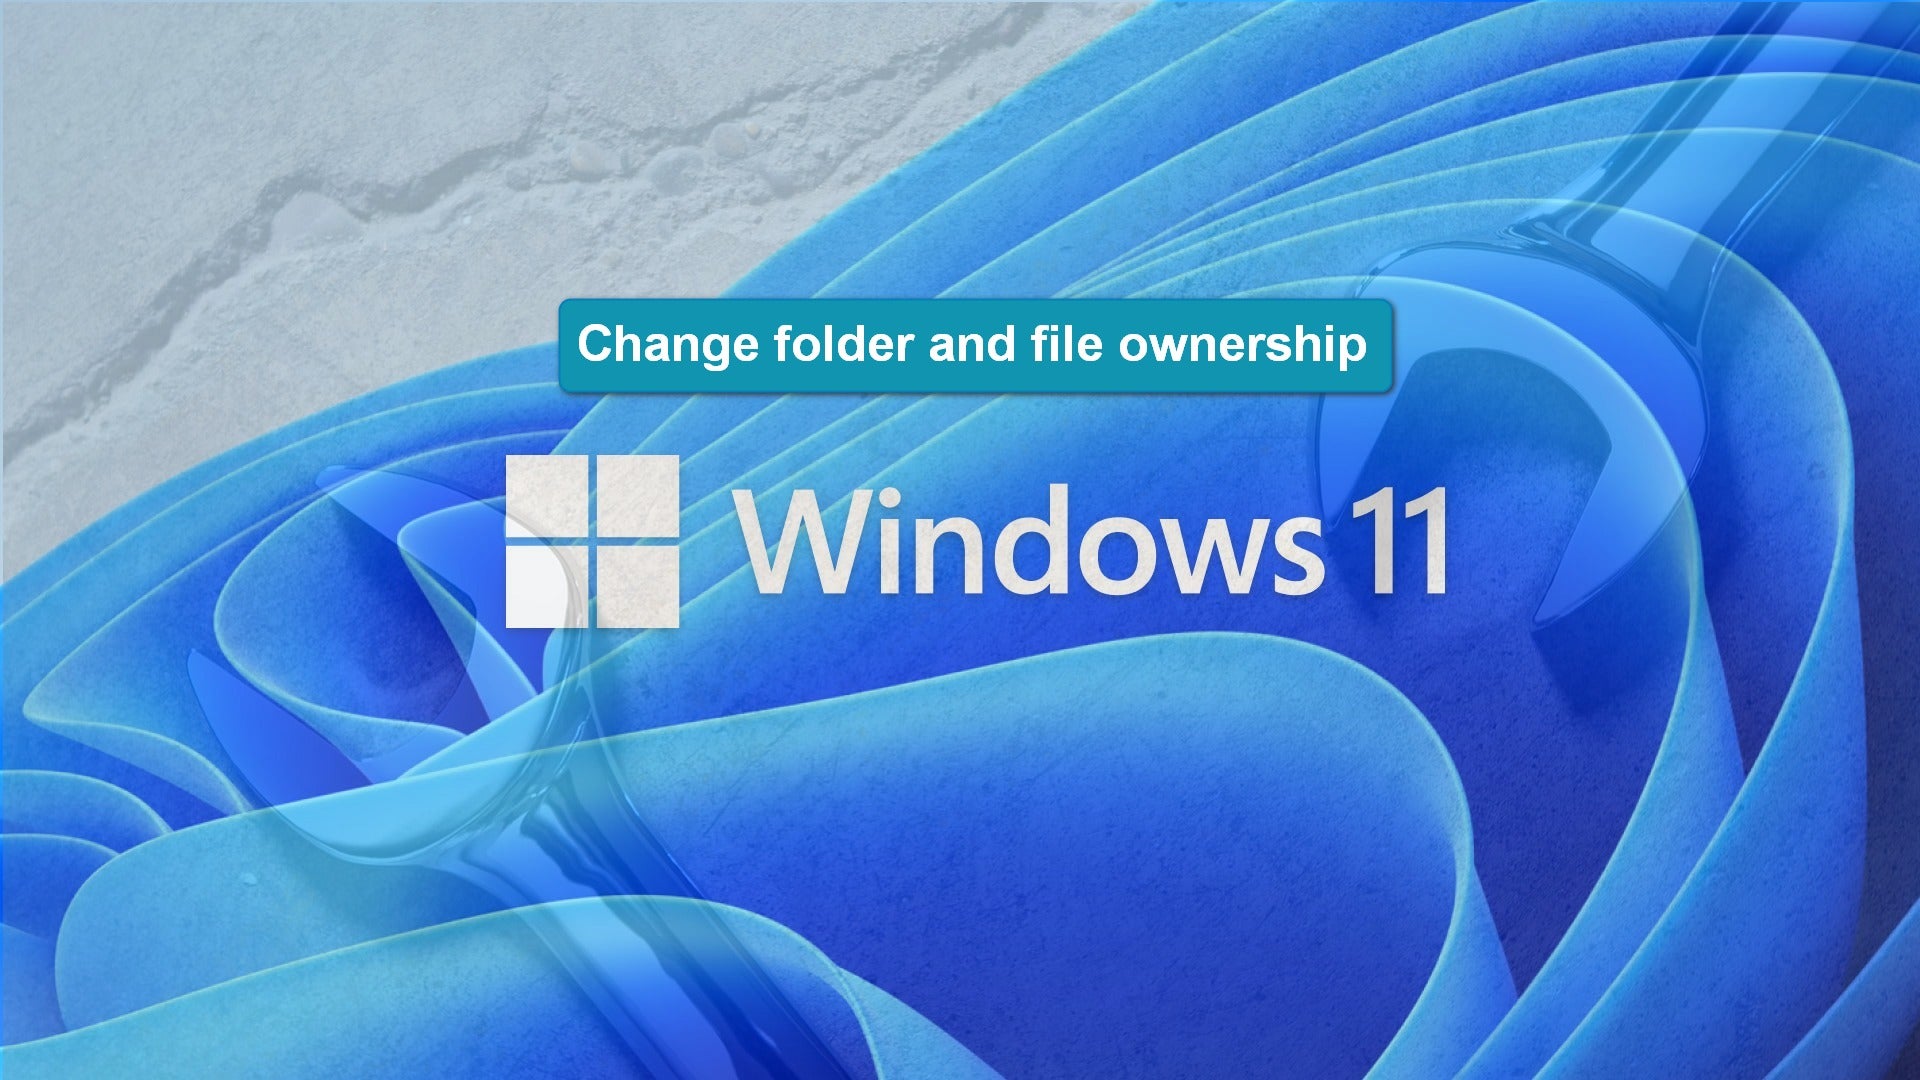 Windows 11 wallpapers made in bing.com/create : r/Windows11